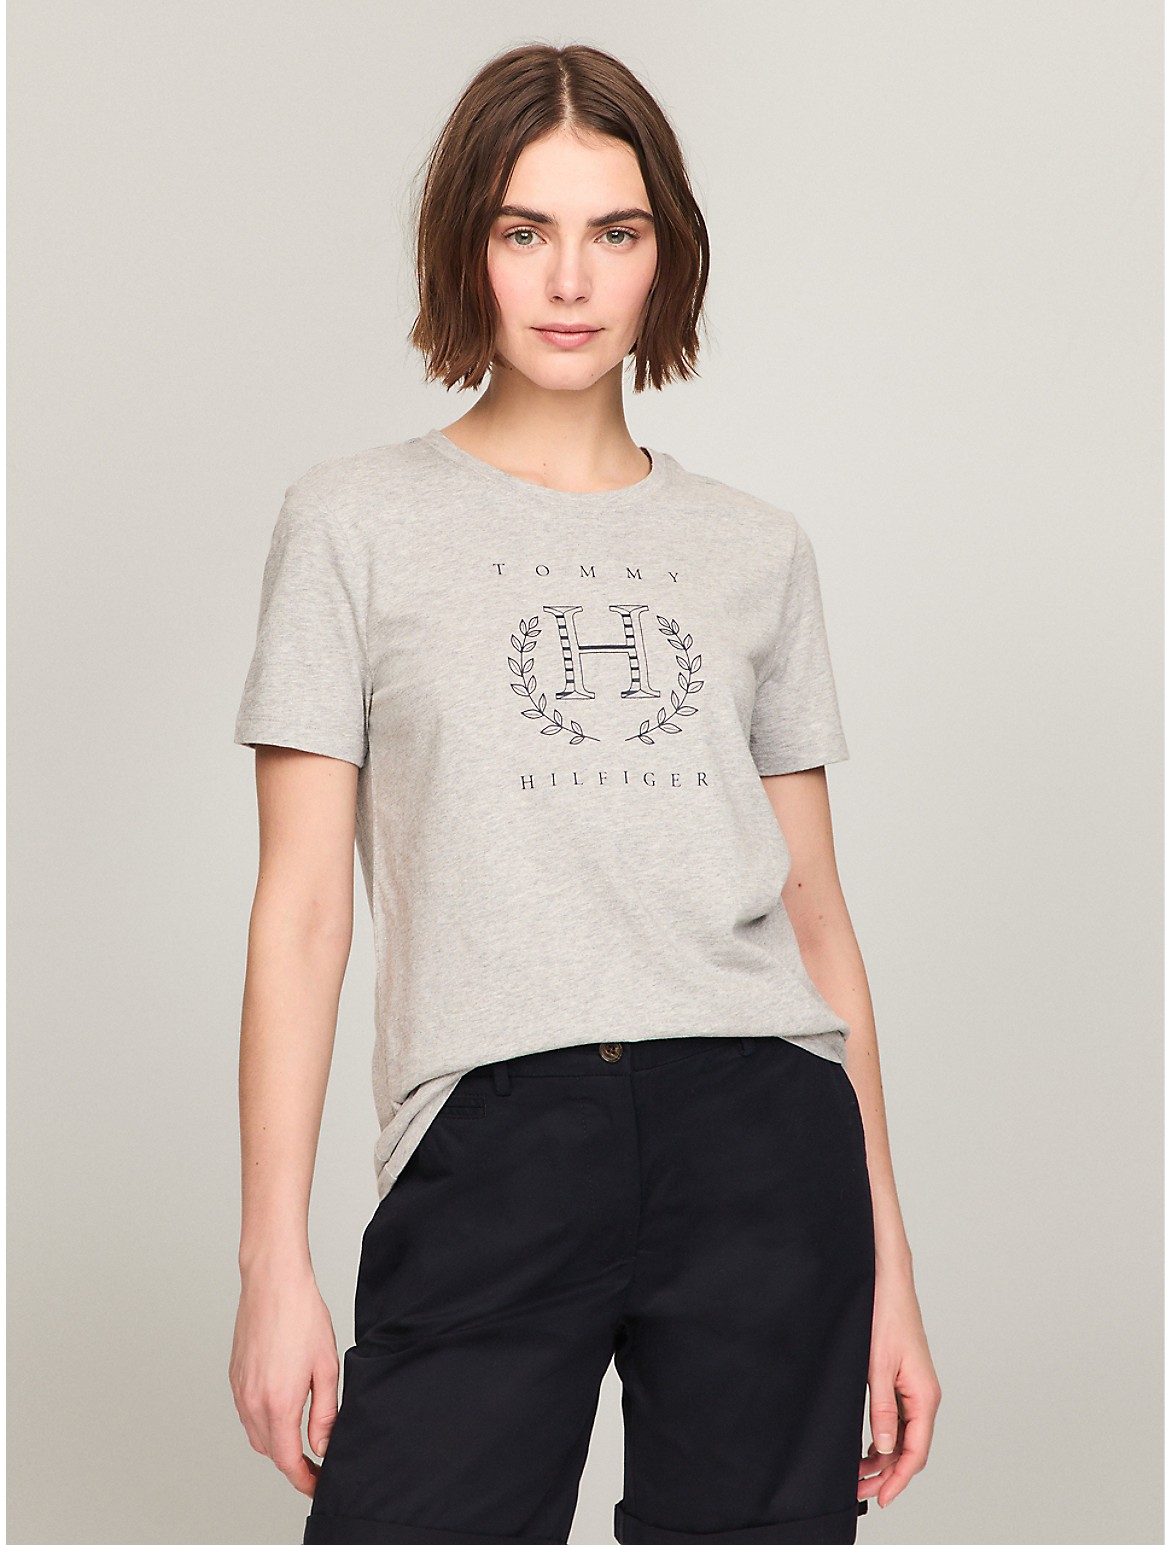 Tommy Hilfiger Women's Laurel Logo T-Shirt